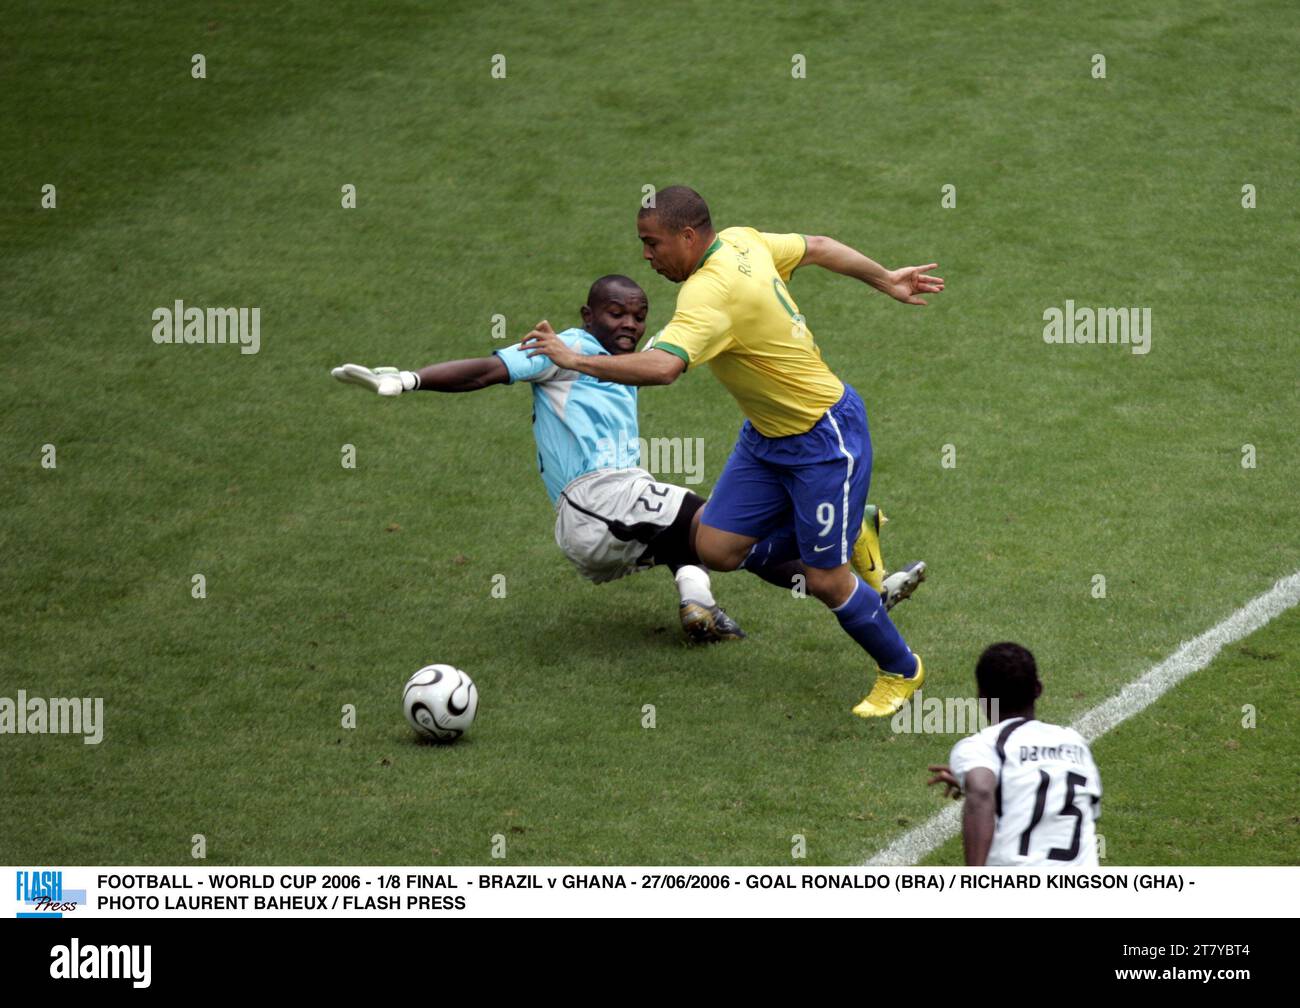 FOOTBALL - WORLD CUP 2006 - 1/8 FINAL - BRAZIL v GHANA - 27/06/2006 - GOAL RONALDO (BRA) / RICHARD KINGSON (GHA) - PHOTO LAURENT BAHEUX / FLASH PRESS Stock Photo